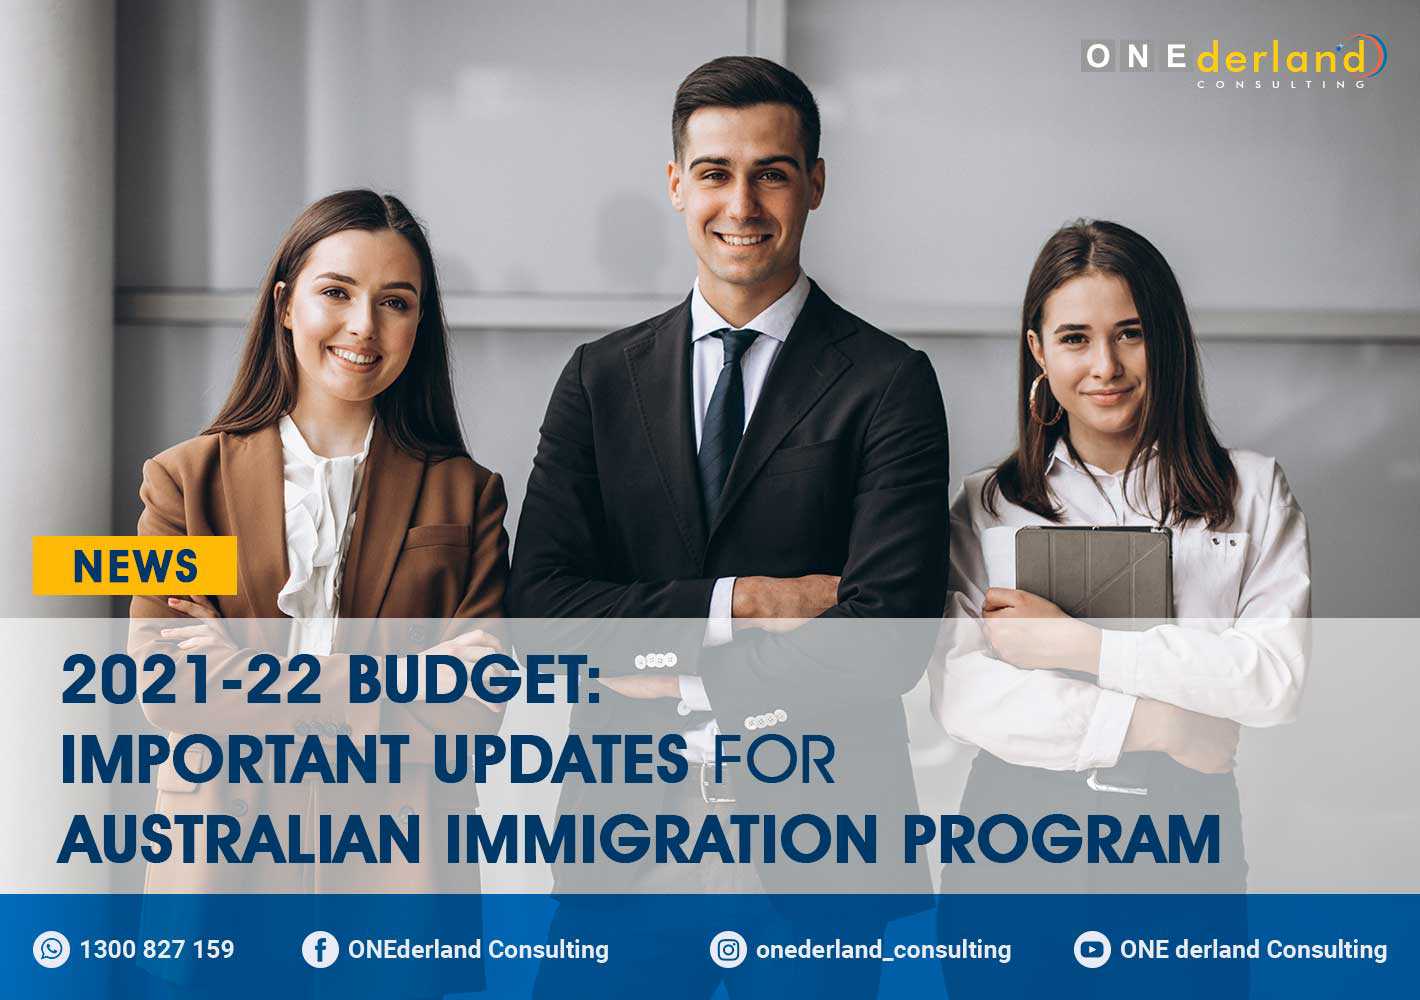 Australian Immigration Program Important Updates for 2021-22 Program Year